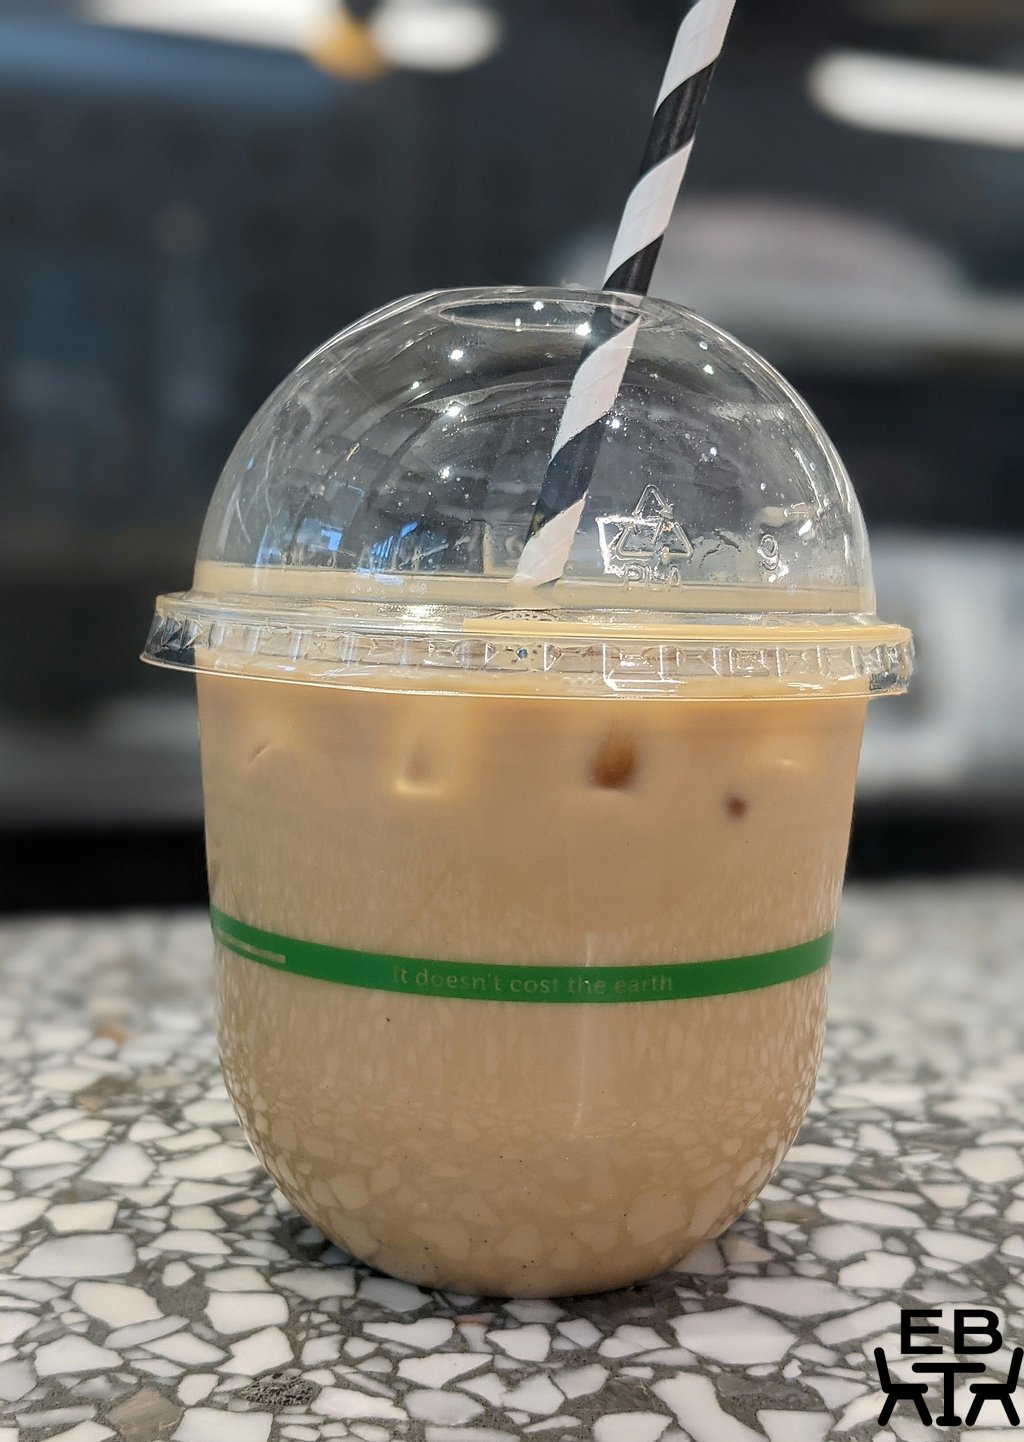 maillard project iced latte